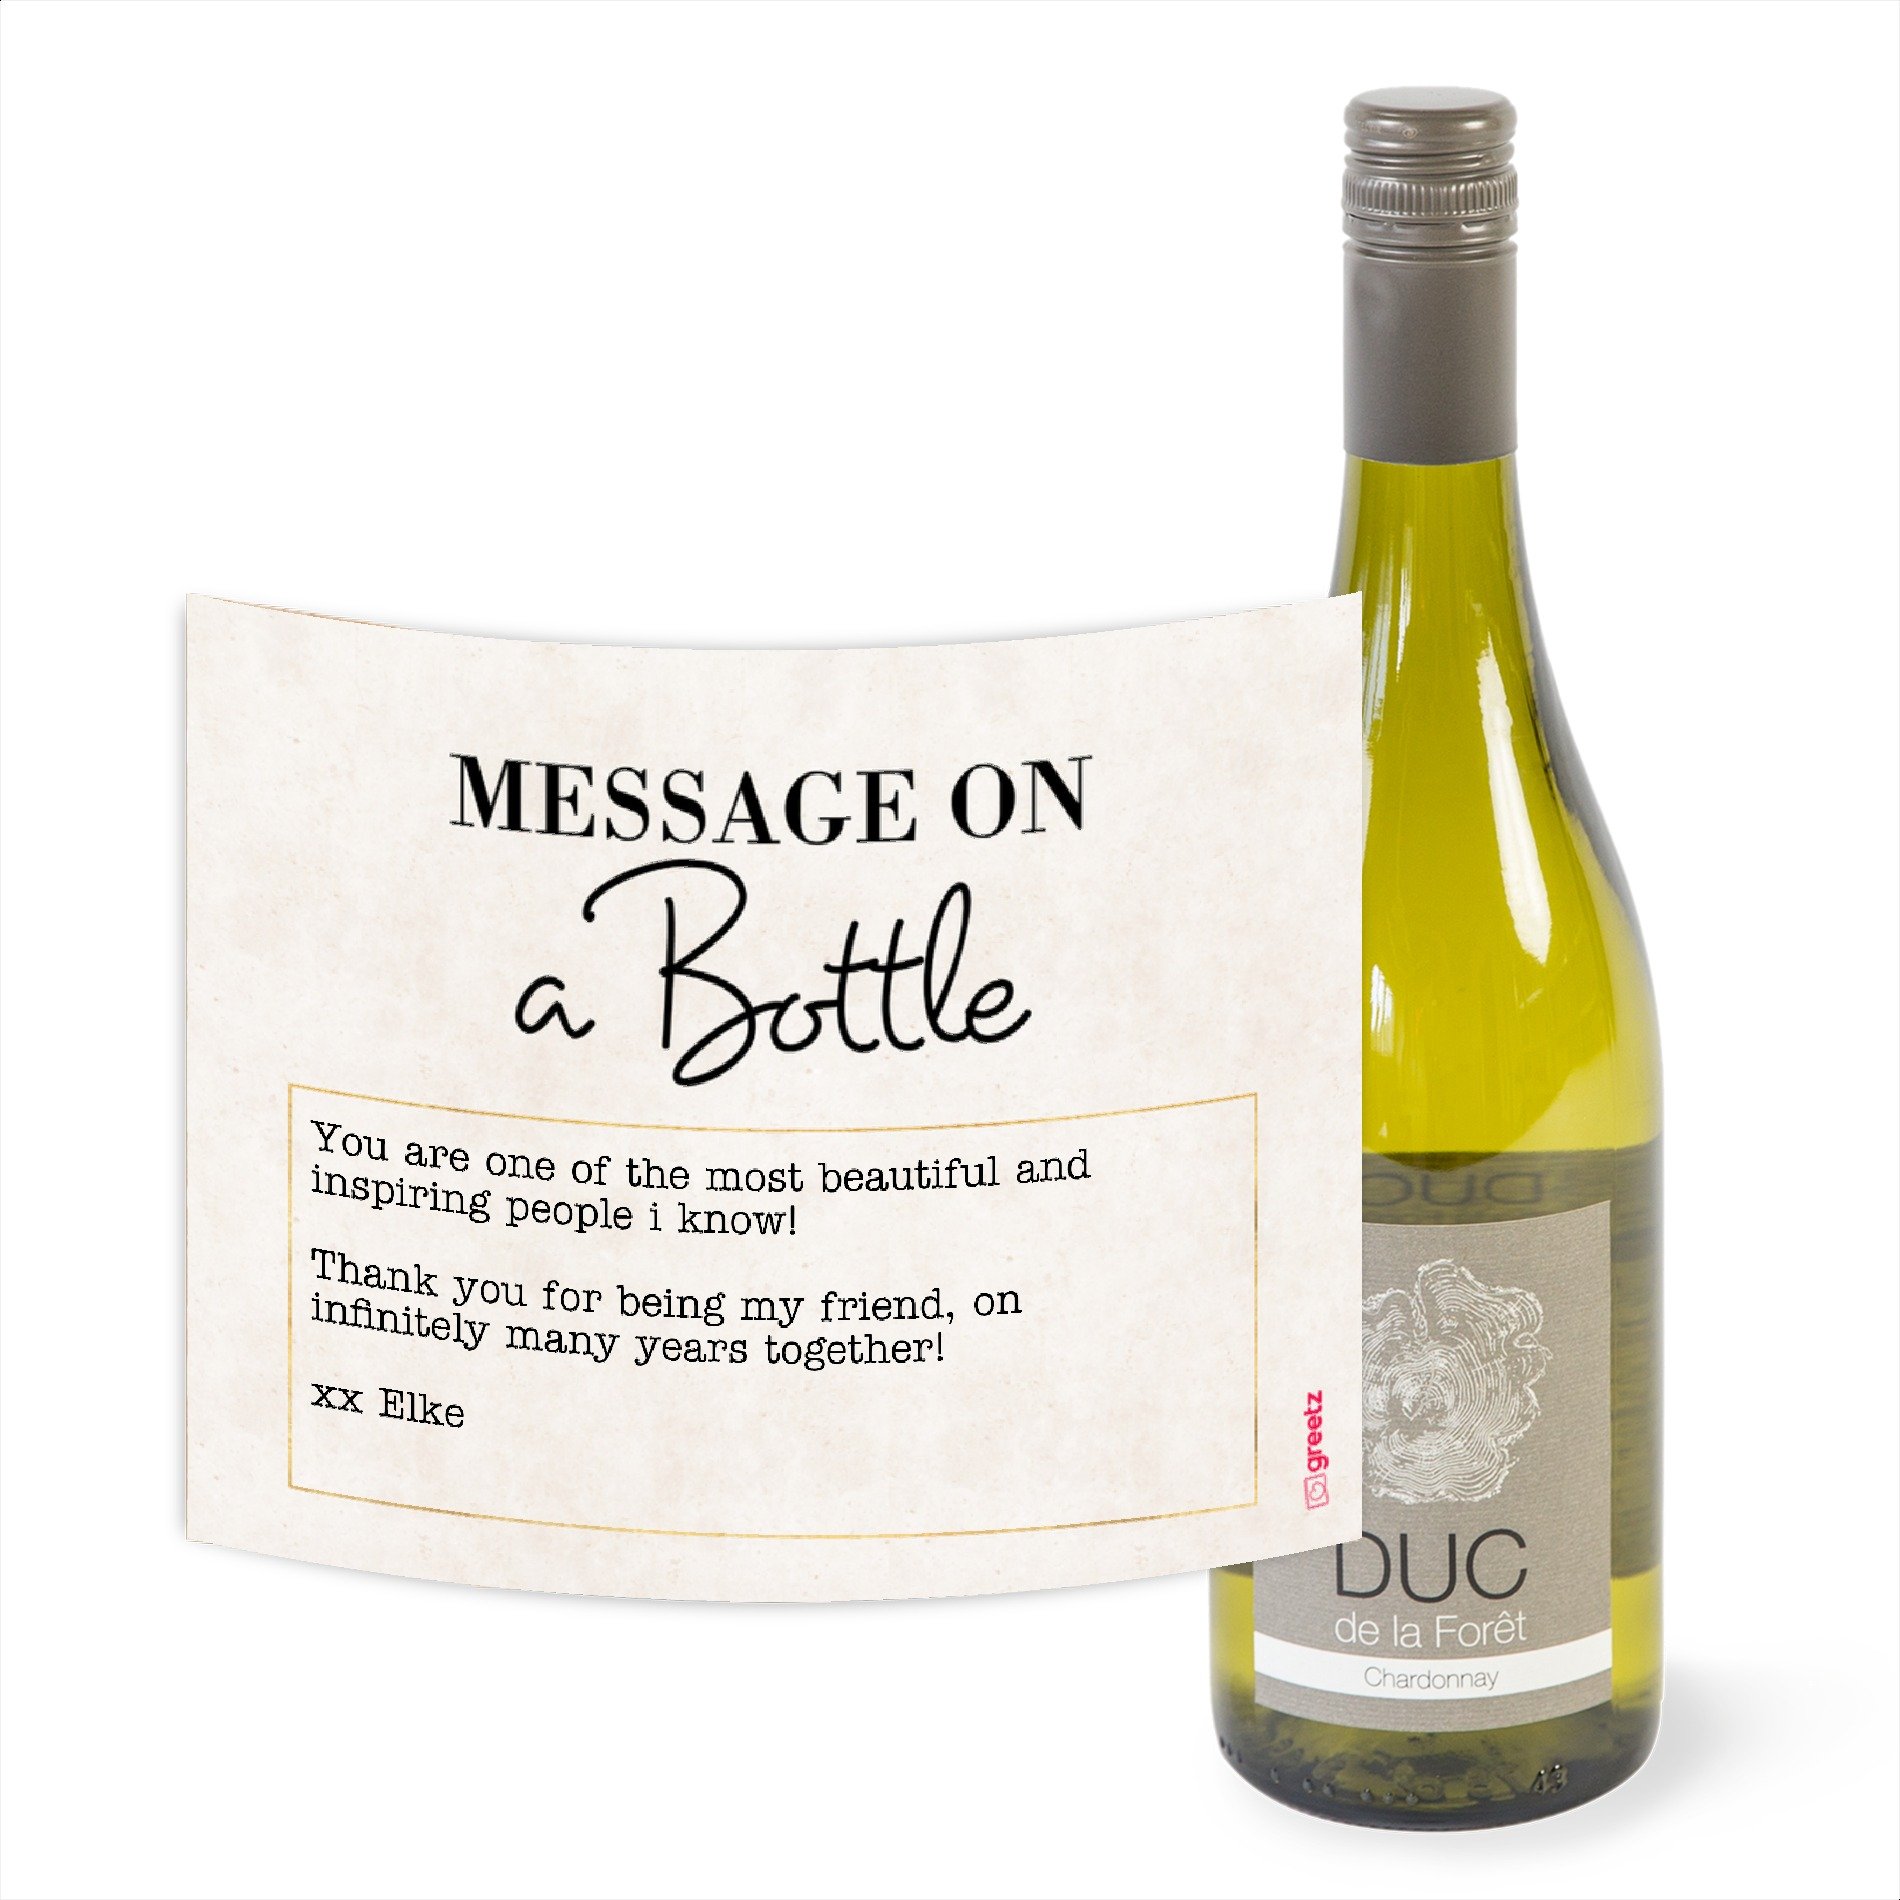 Duc de la Foret - Chardonnay - Message met eigen tekst - 750 ml